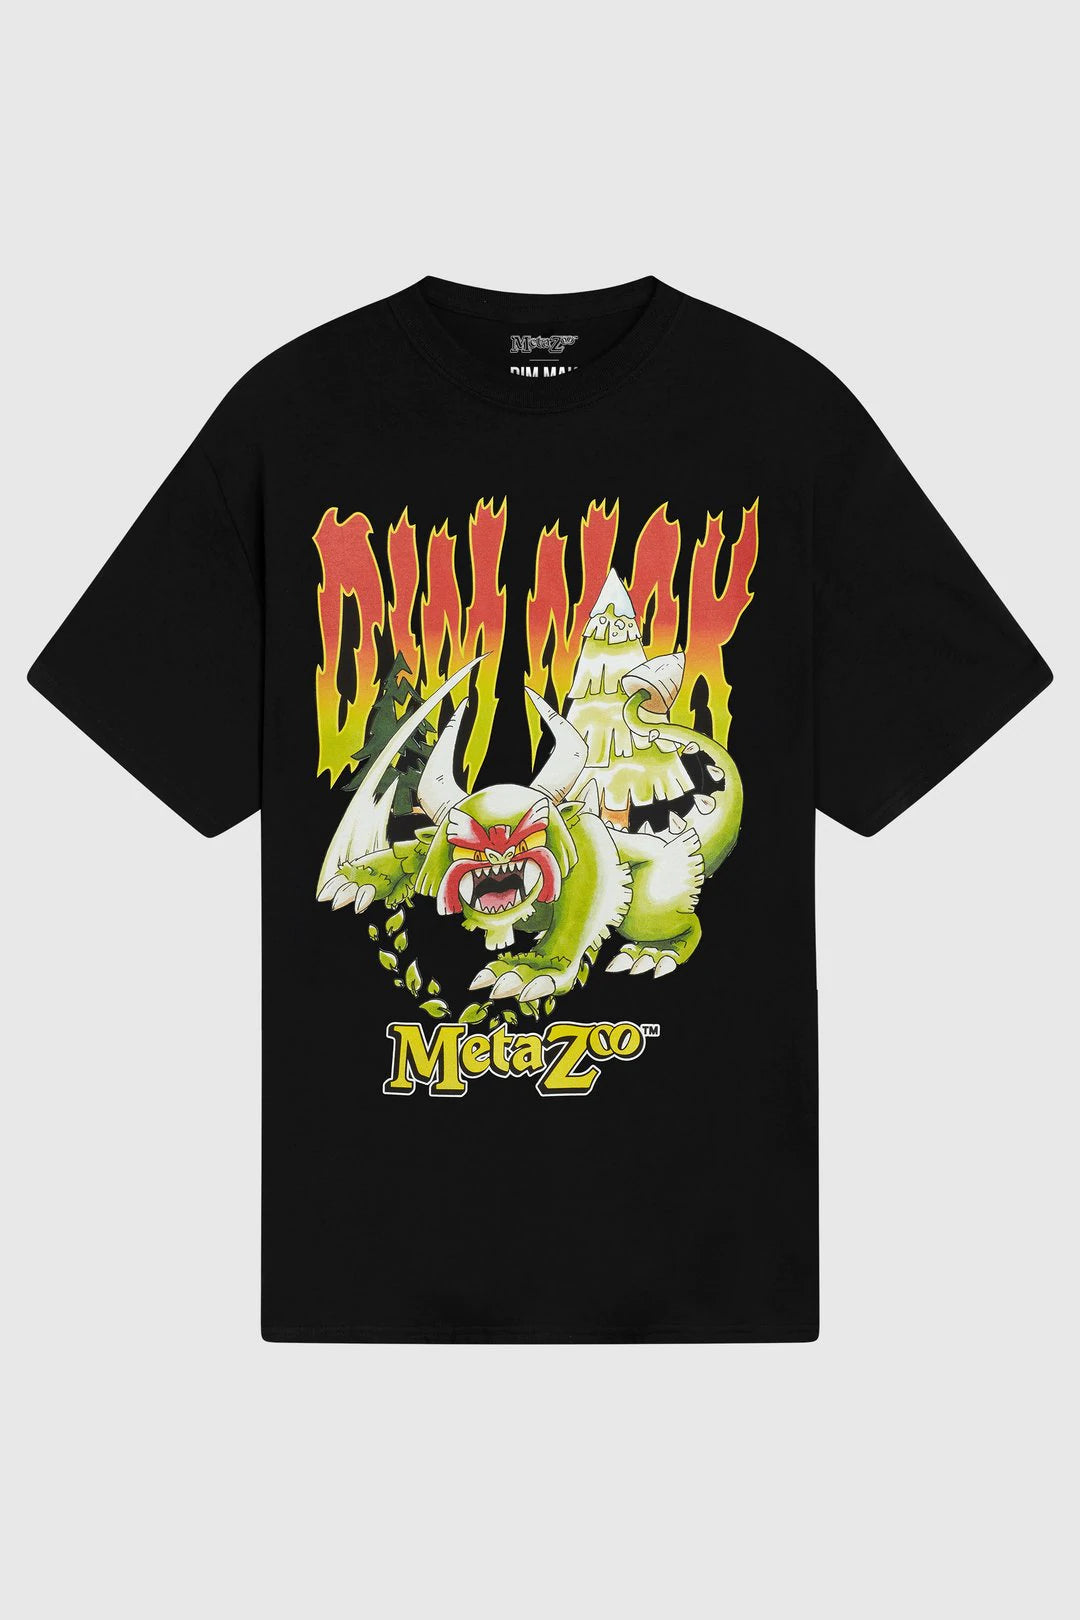 MetaZoo x Dim Mak Limited Edition T-Shirts